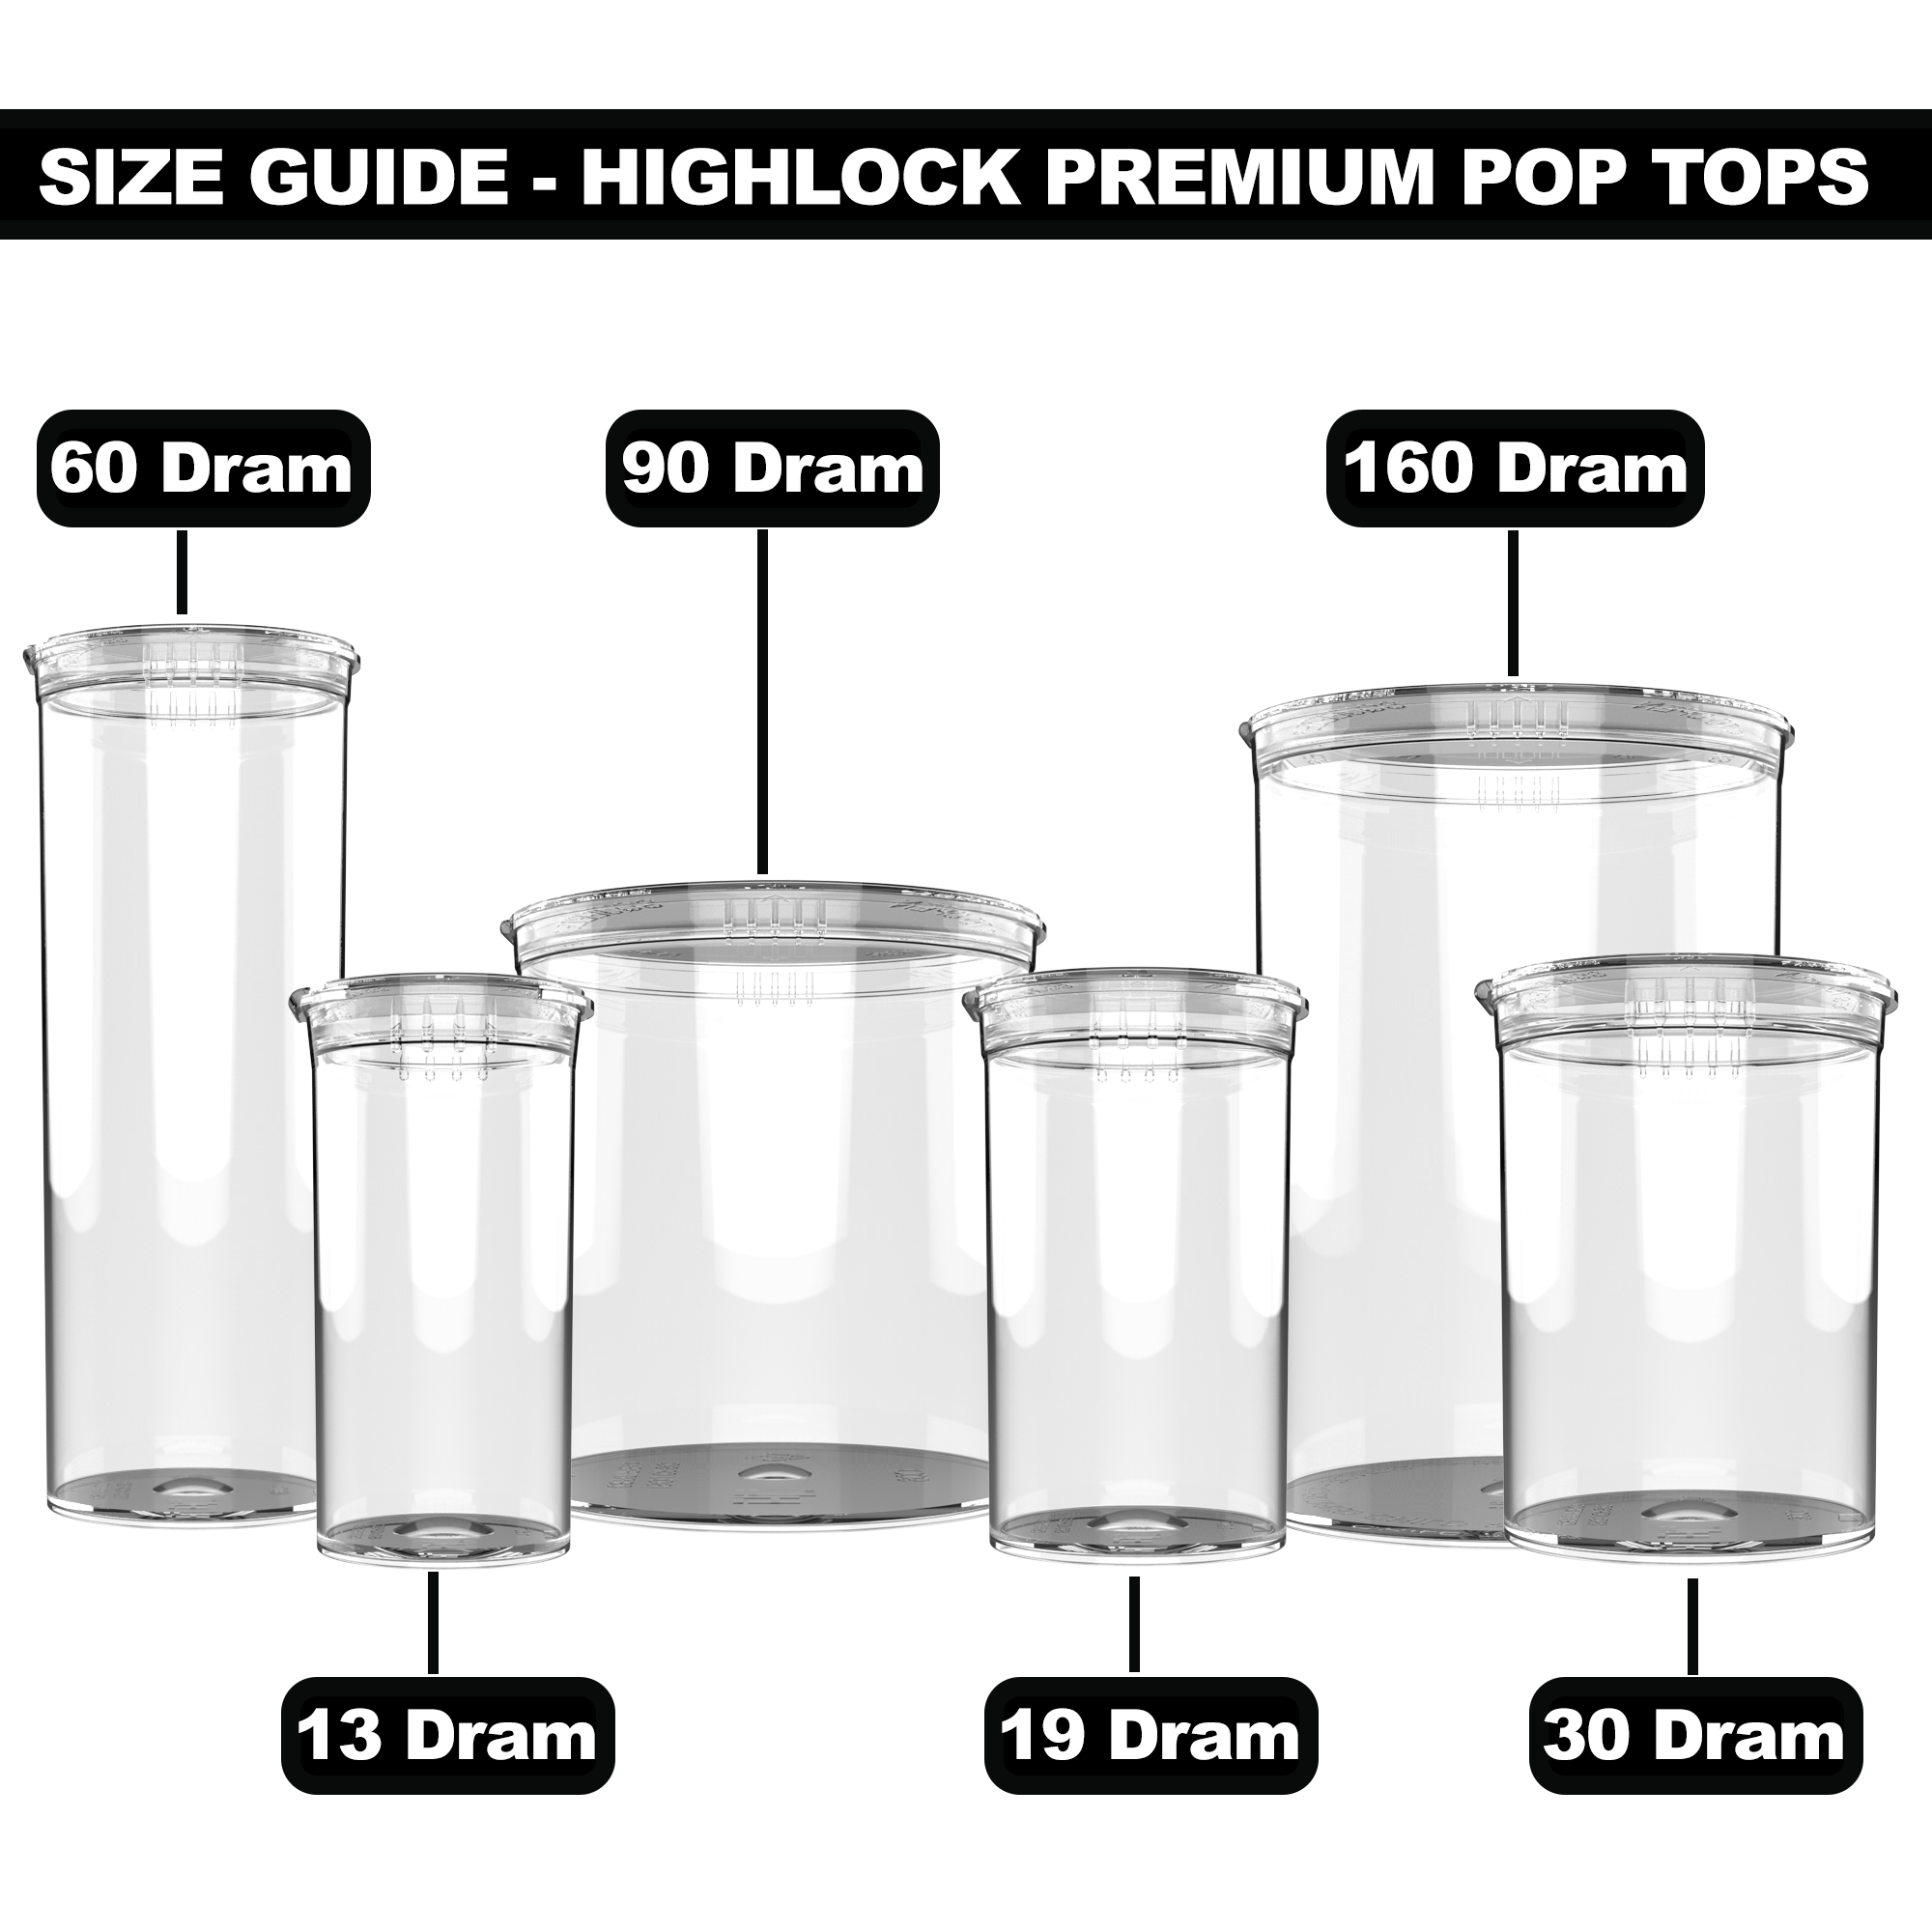 19 Dram Pop Top Bottles - Shop Full Scale Online